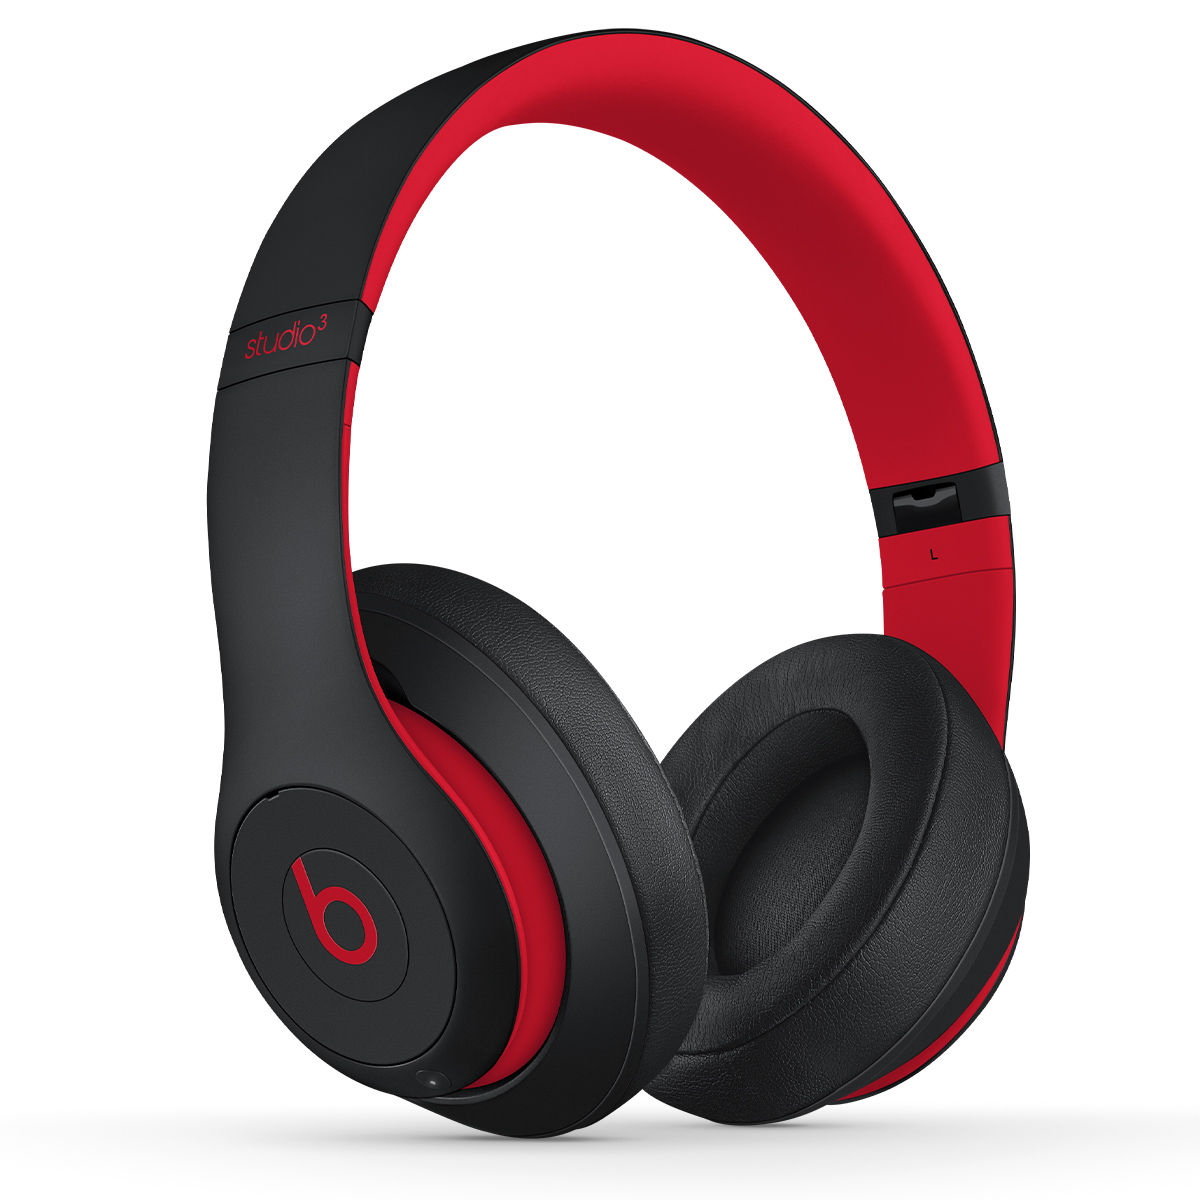 Studio³ Wireless Headphones Support - Beats by Dre